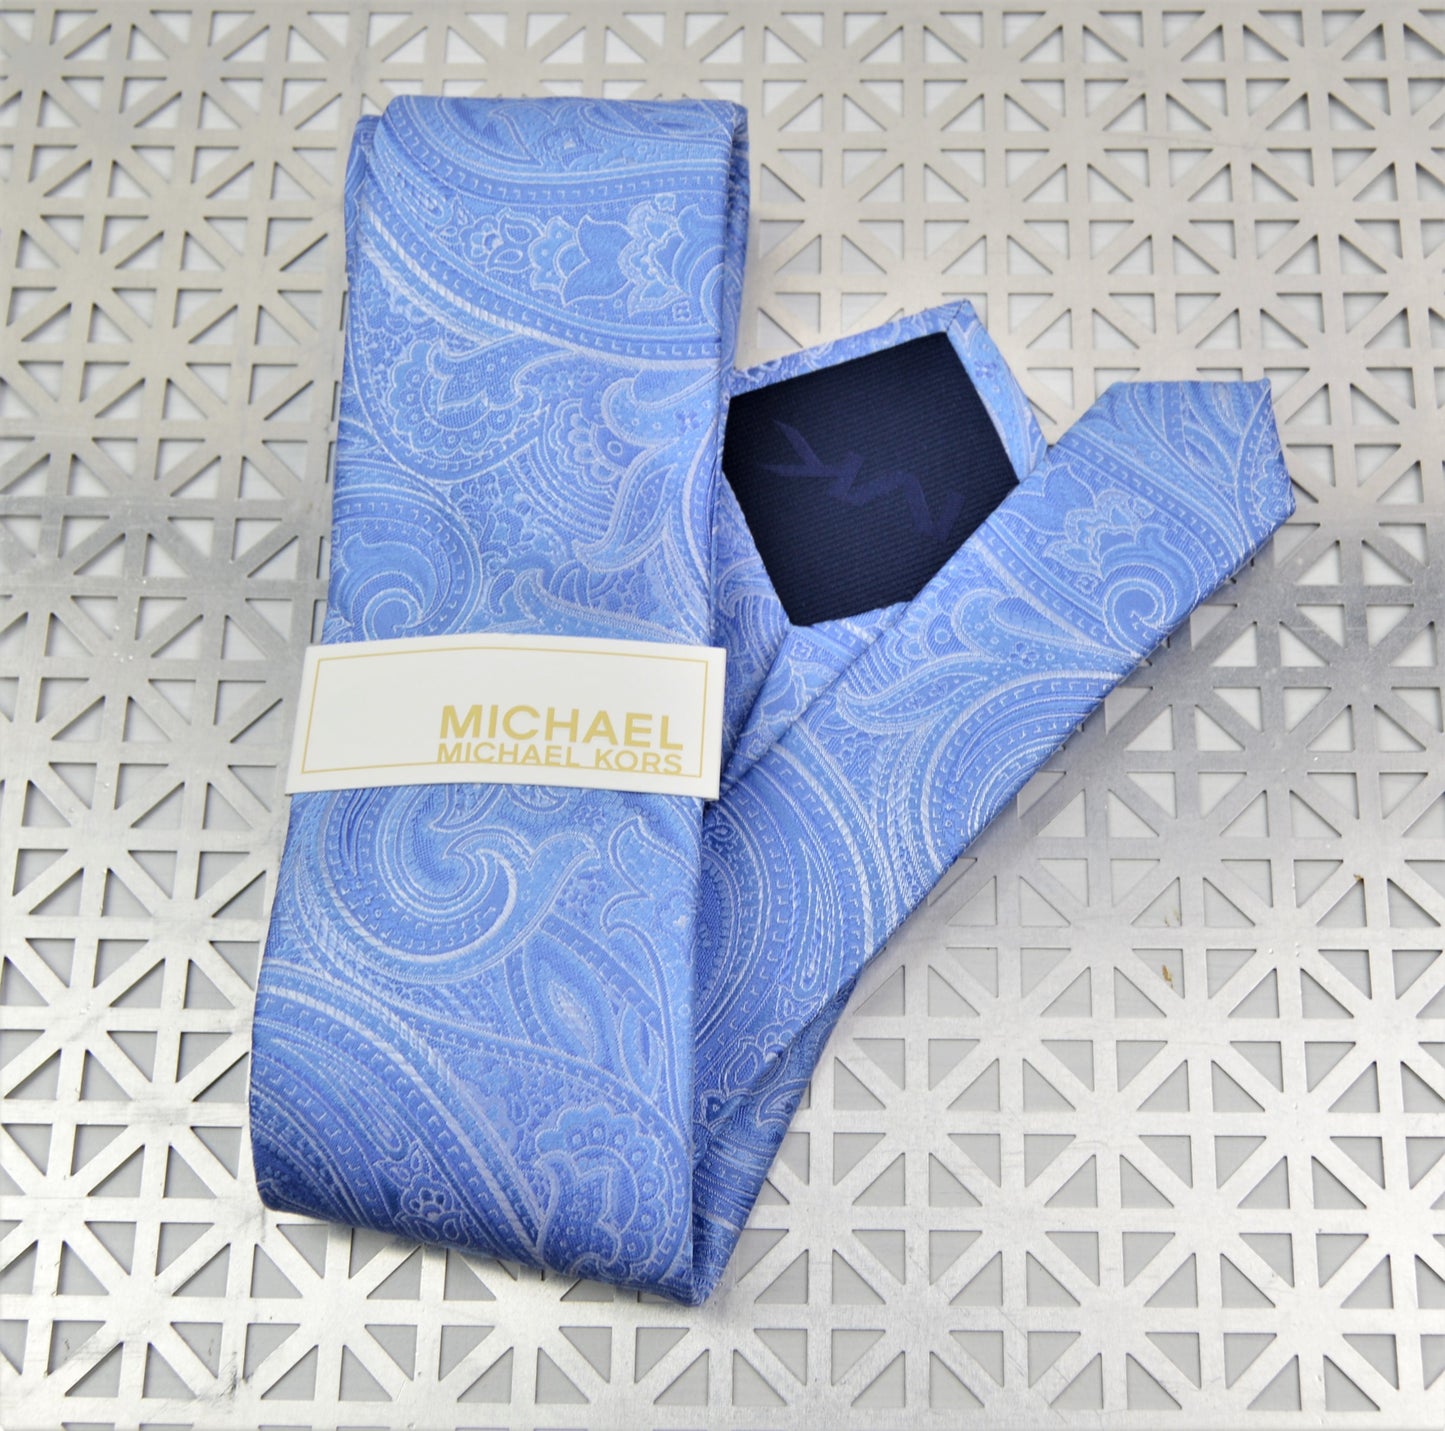 MICHAEL KORS Petal Textured Tie 100% Silk